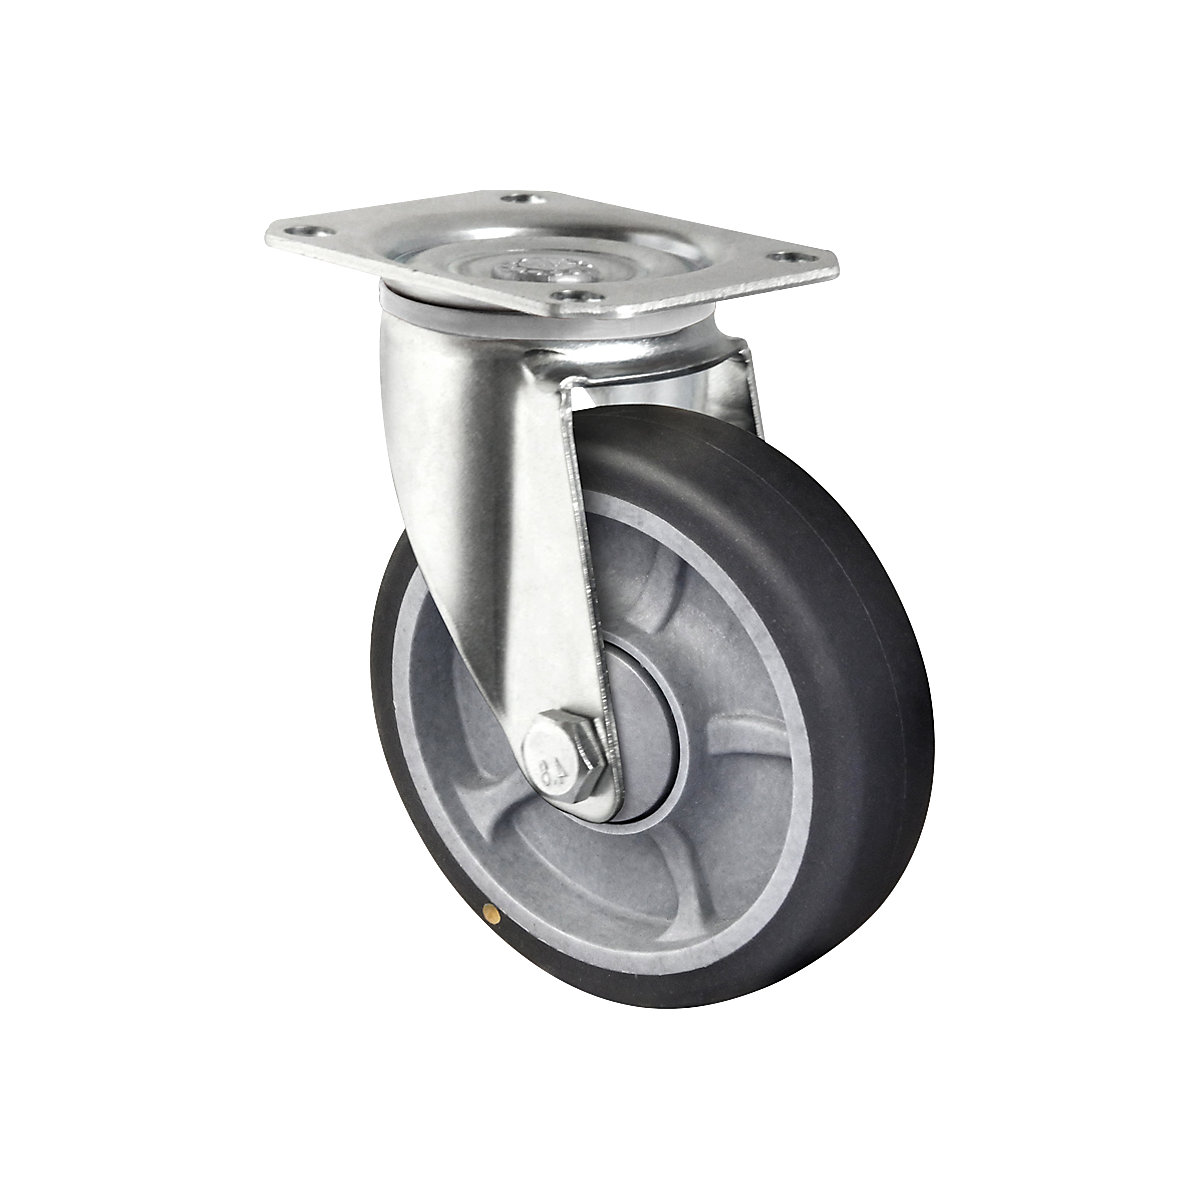 EUROKRAFTbasic – TPE tyres on PP rim, ESD, 2+ items, wheel Ø x width 125 x 35 mm, swivel castor